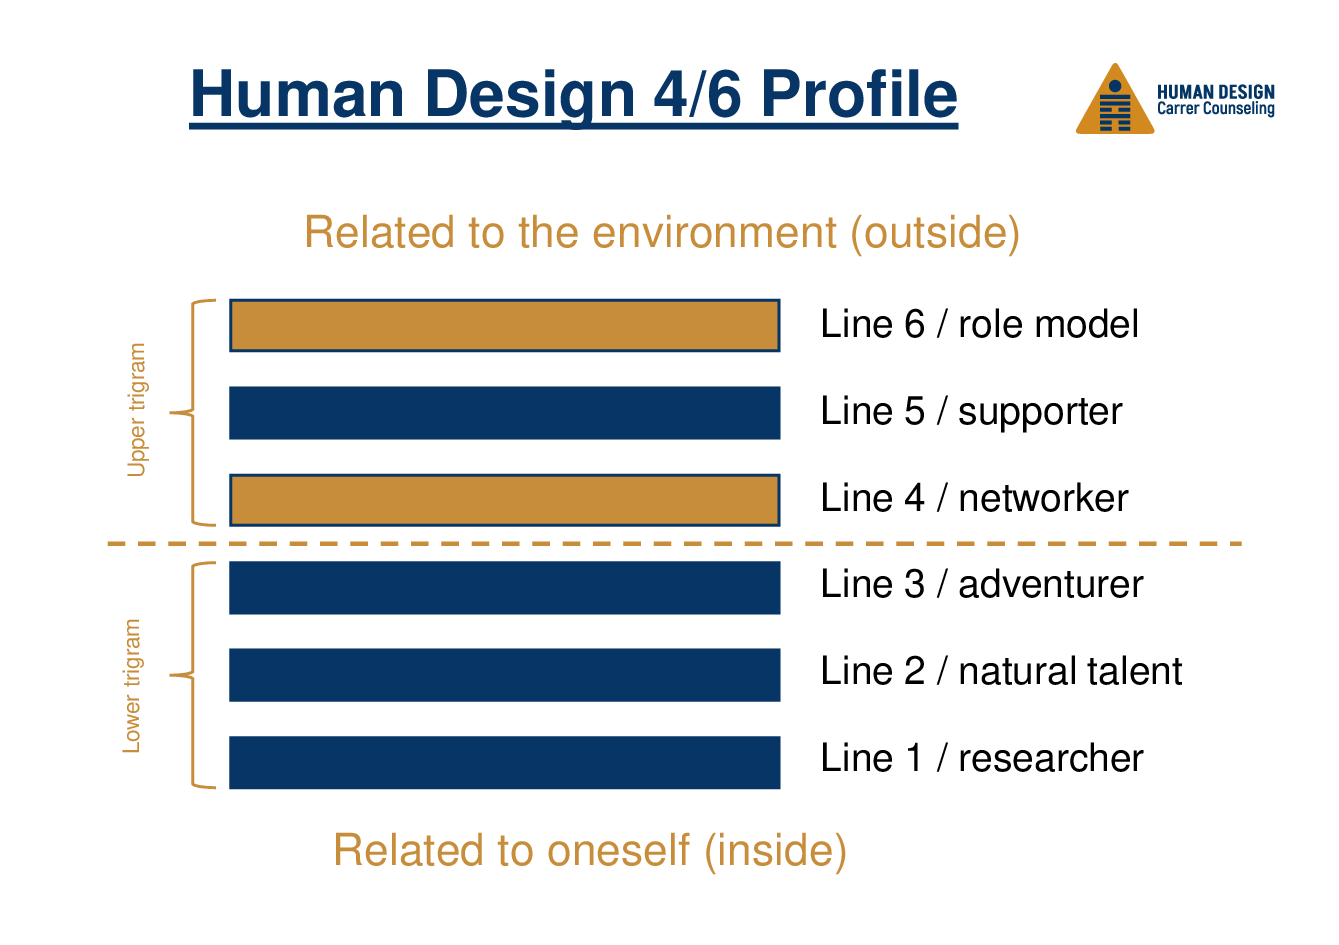 Human Design 4/6 Profile on the job